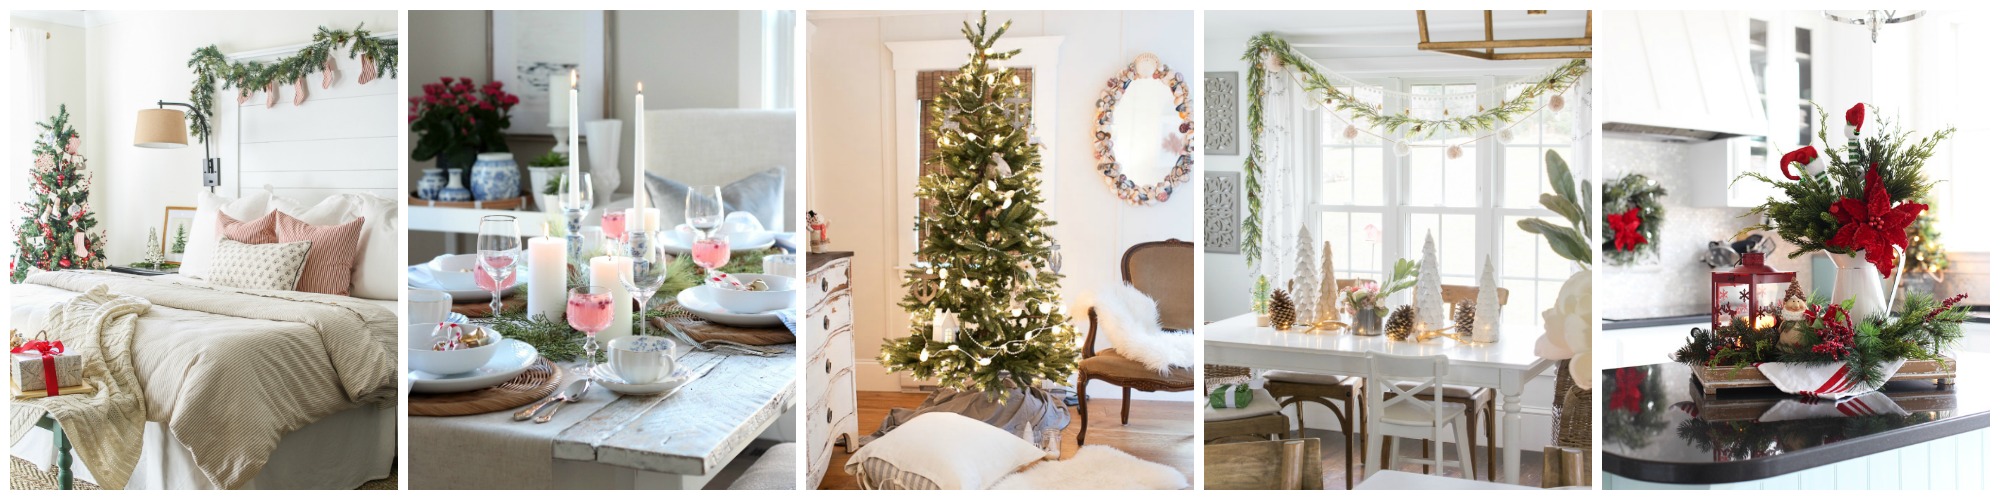 Christmas decorating ideas from a blog tour- Maison de Pax